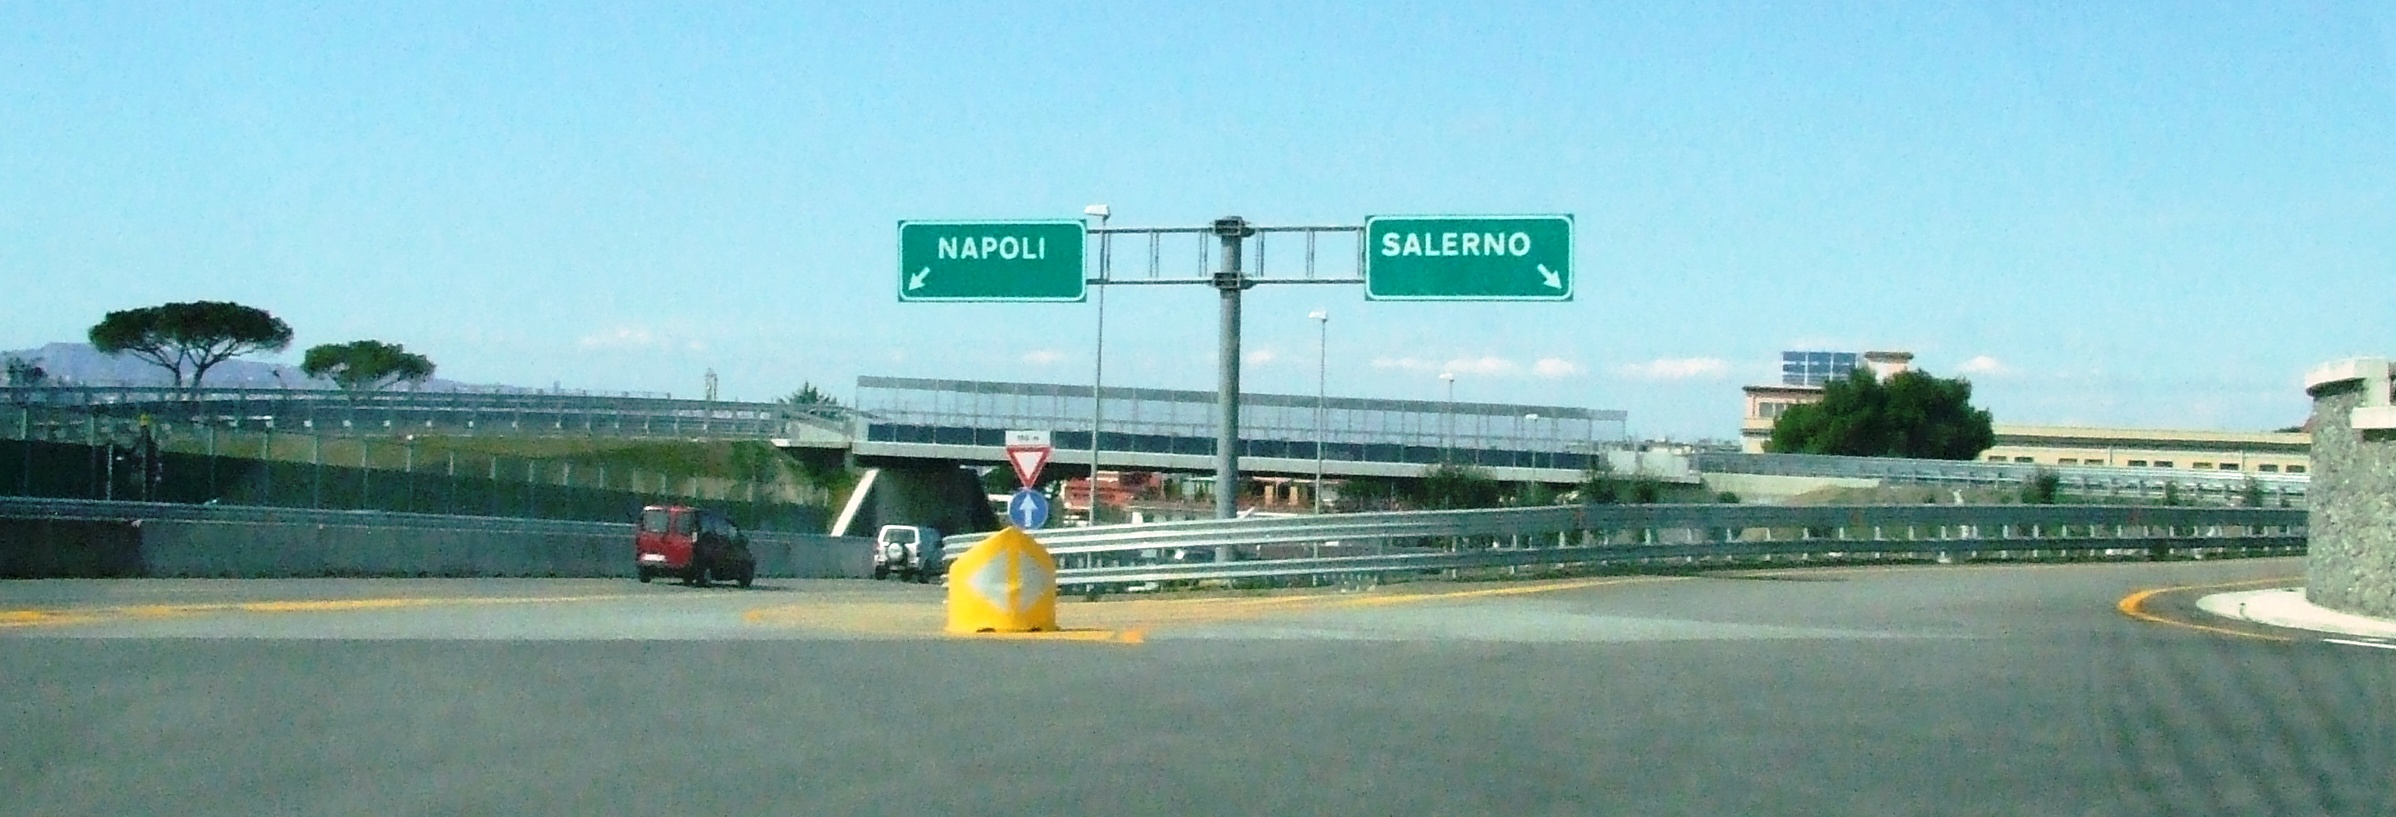 Napoli-Salerno